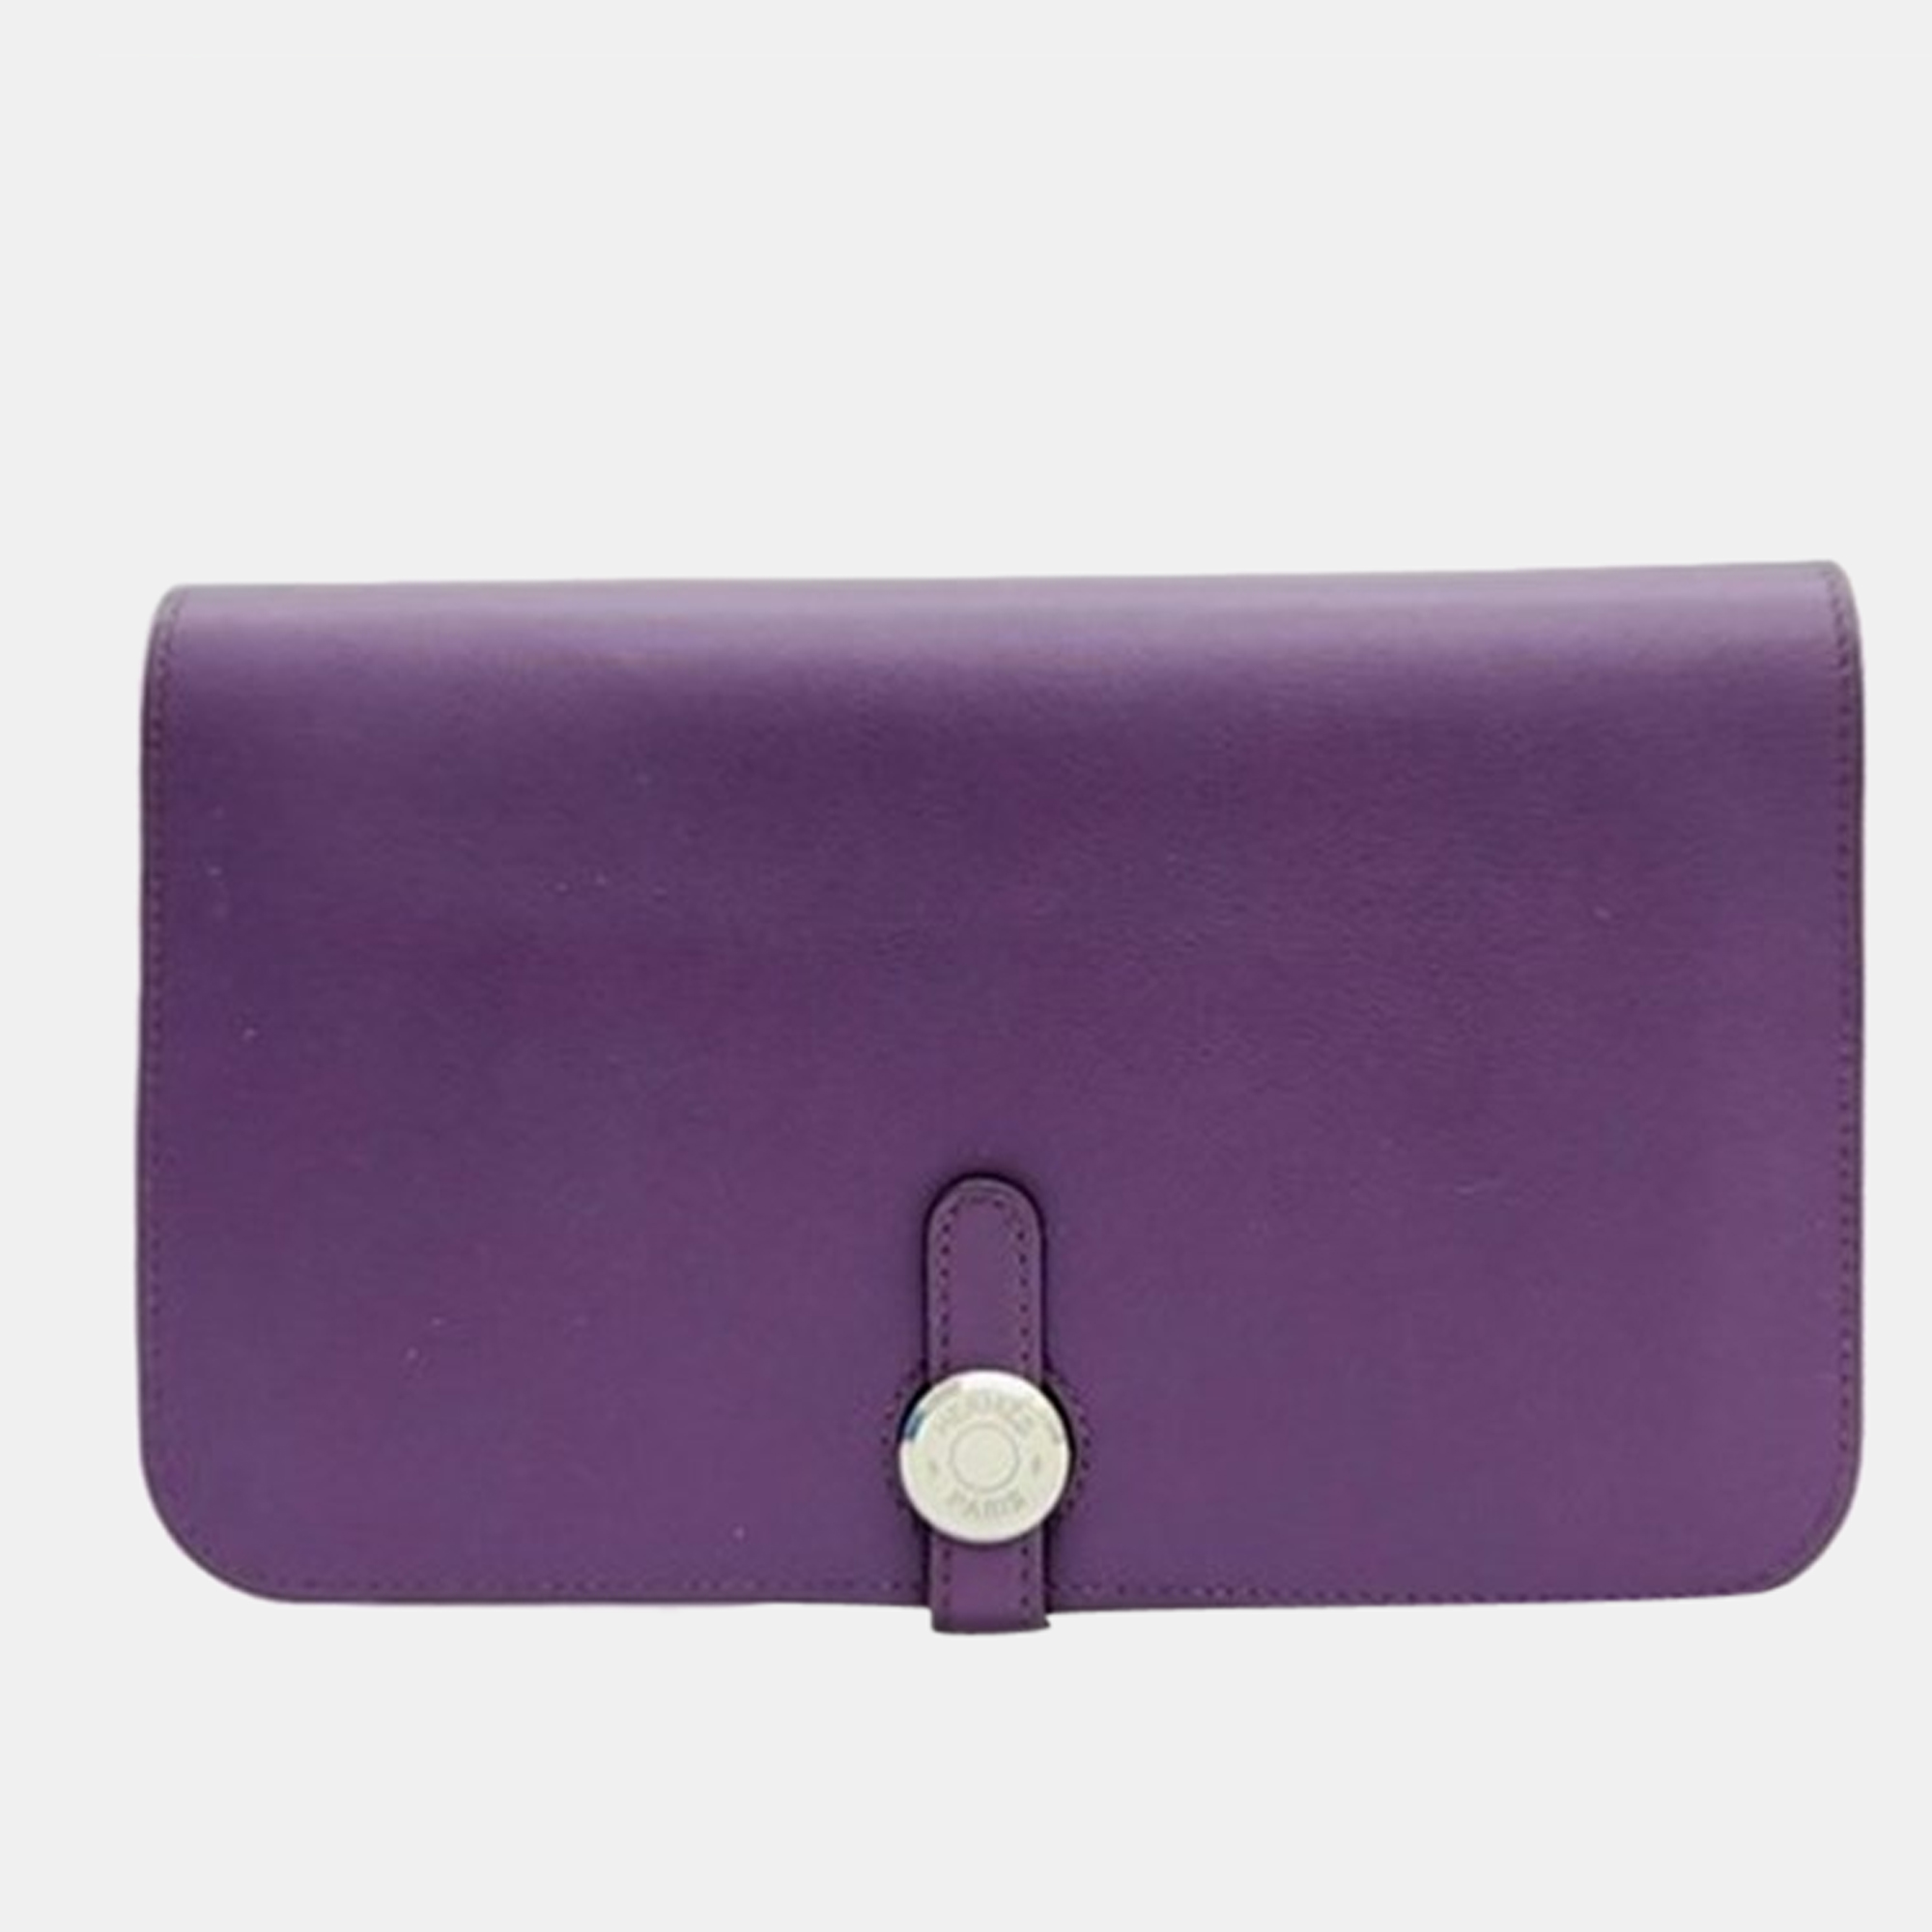 Hermes purple leather dogon wallet